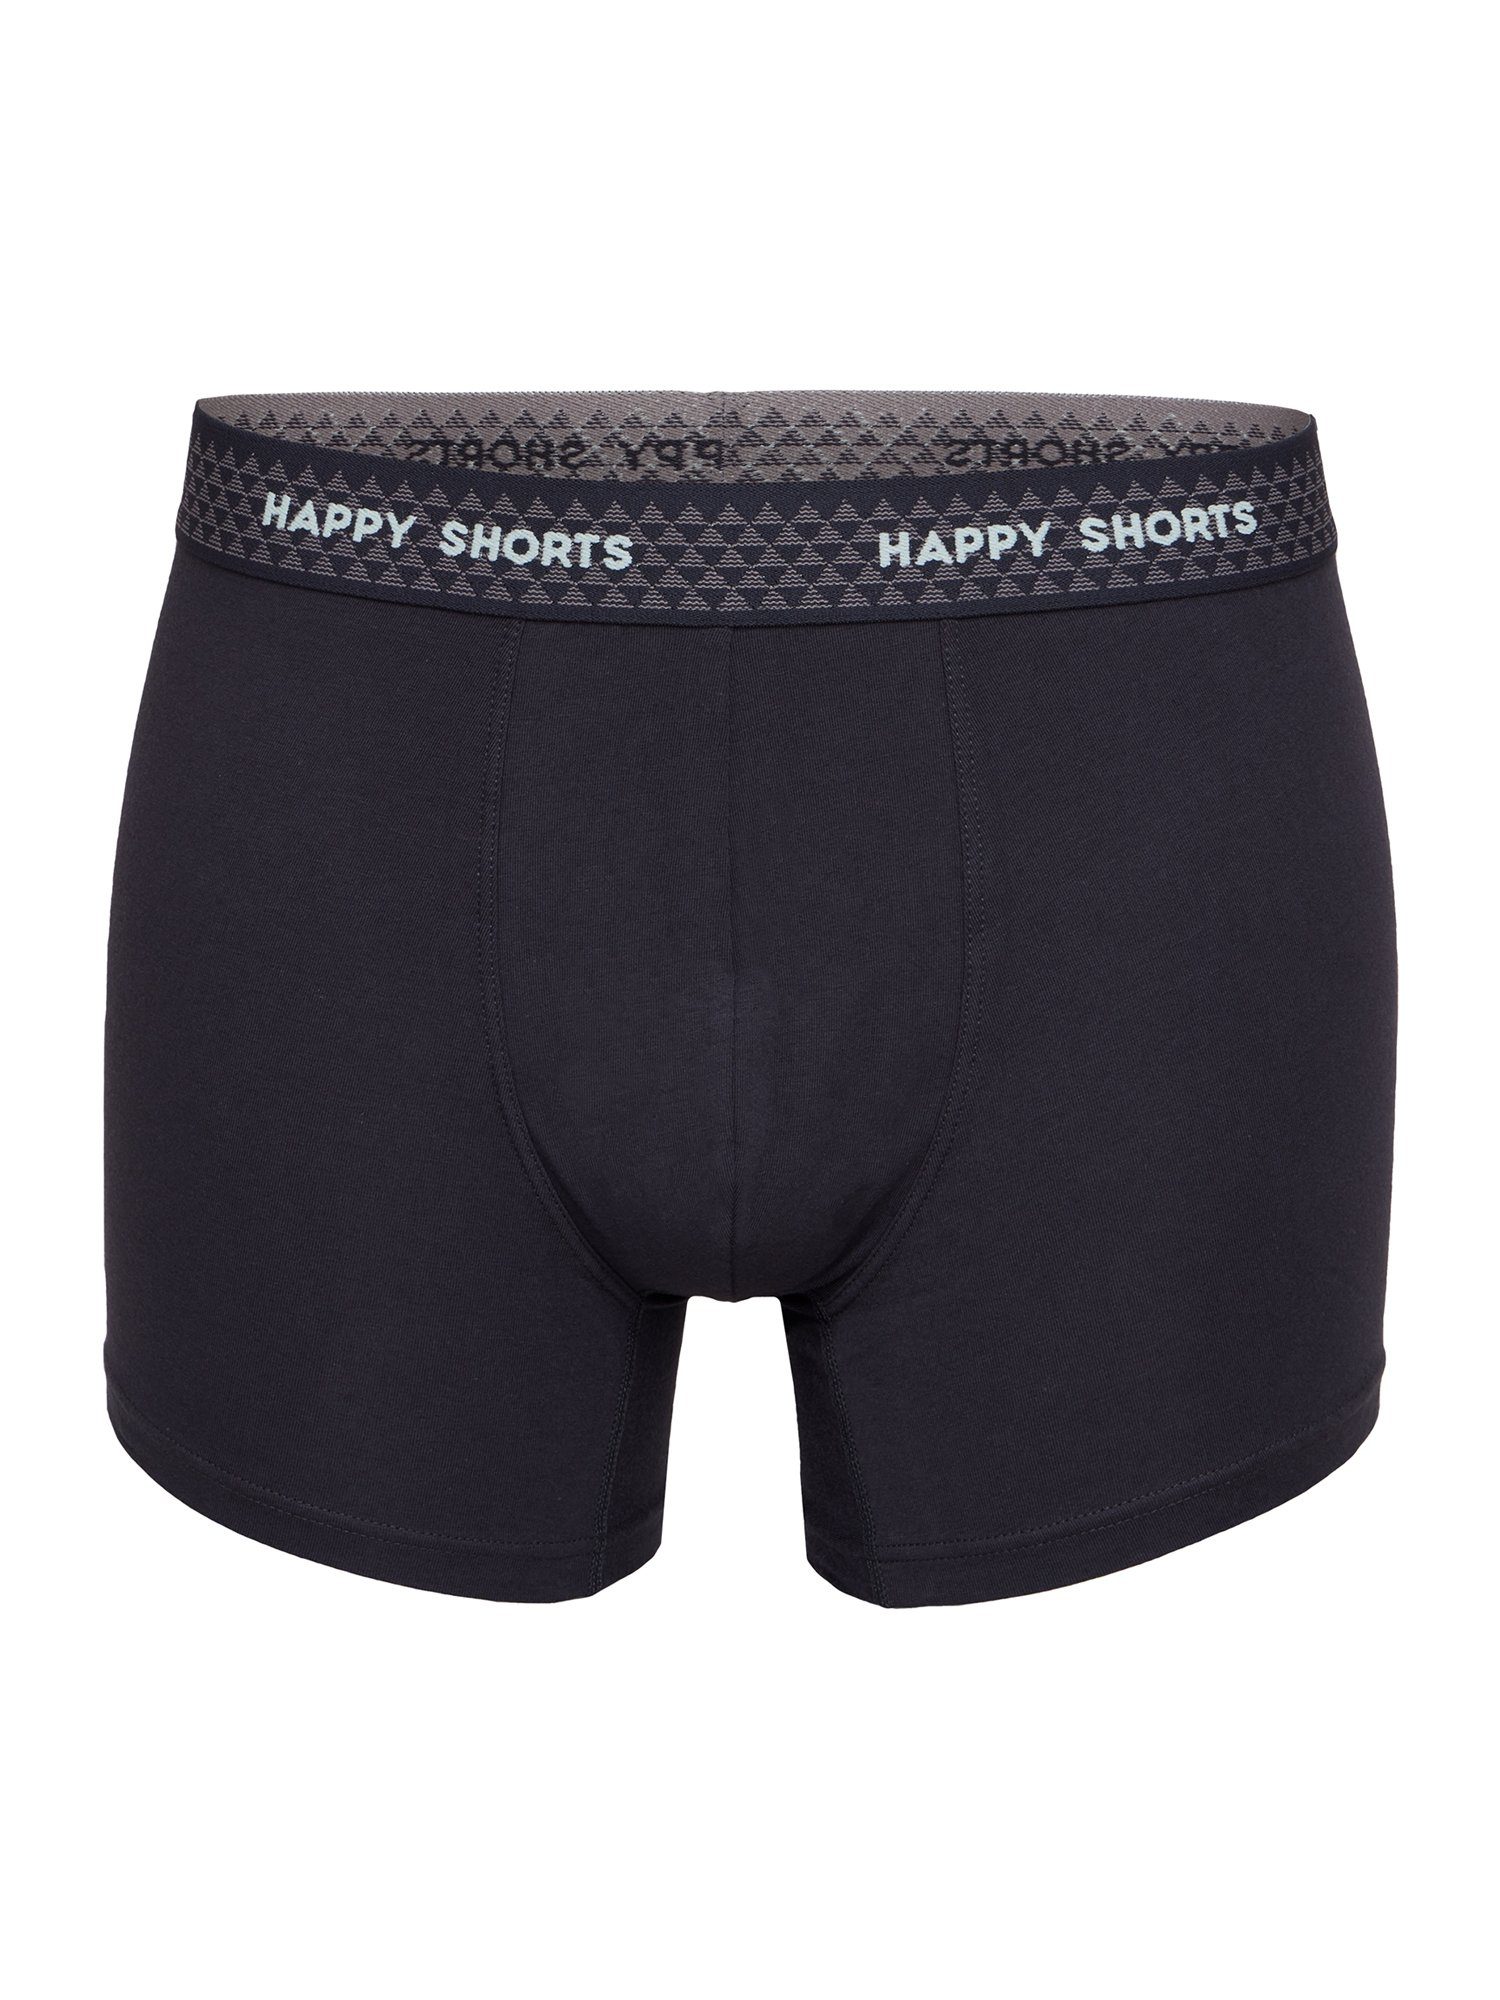 Pants (2-St) unterhose Retro-shorts Dusty Retro Retro-Boxer Mint Triangles HAPPY SHORTS Trunks